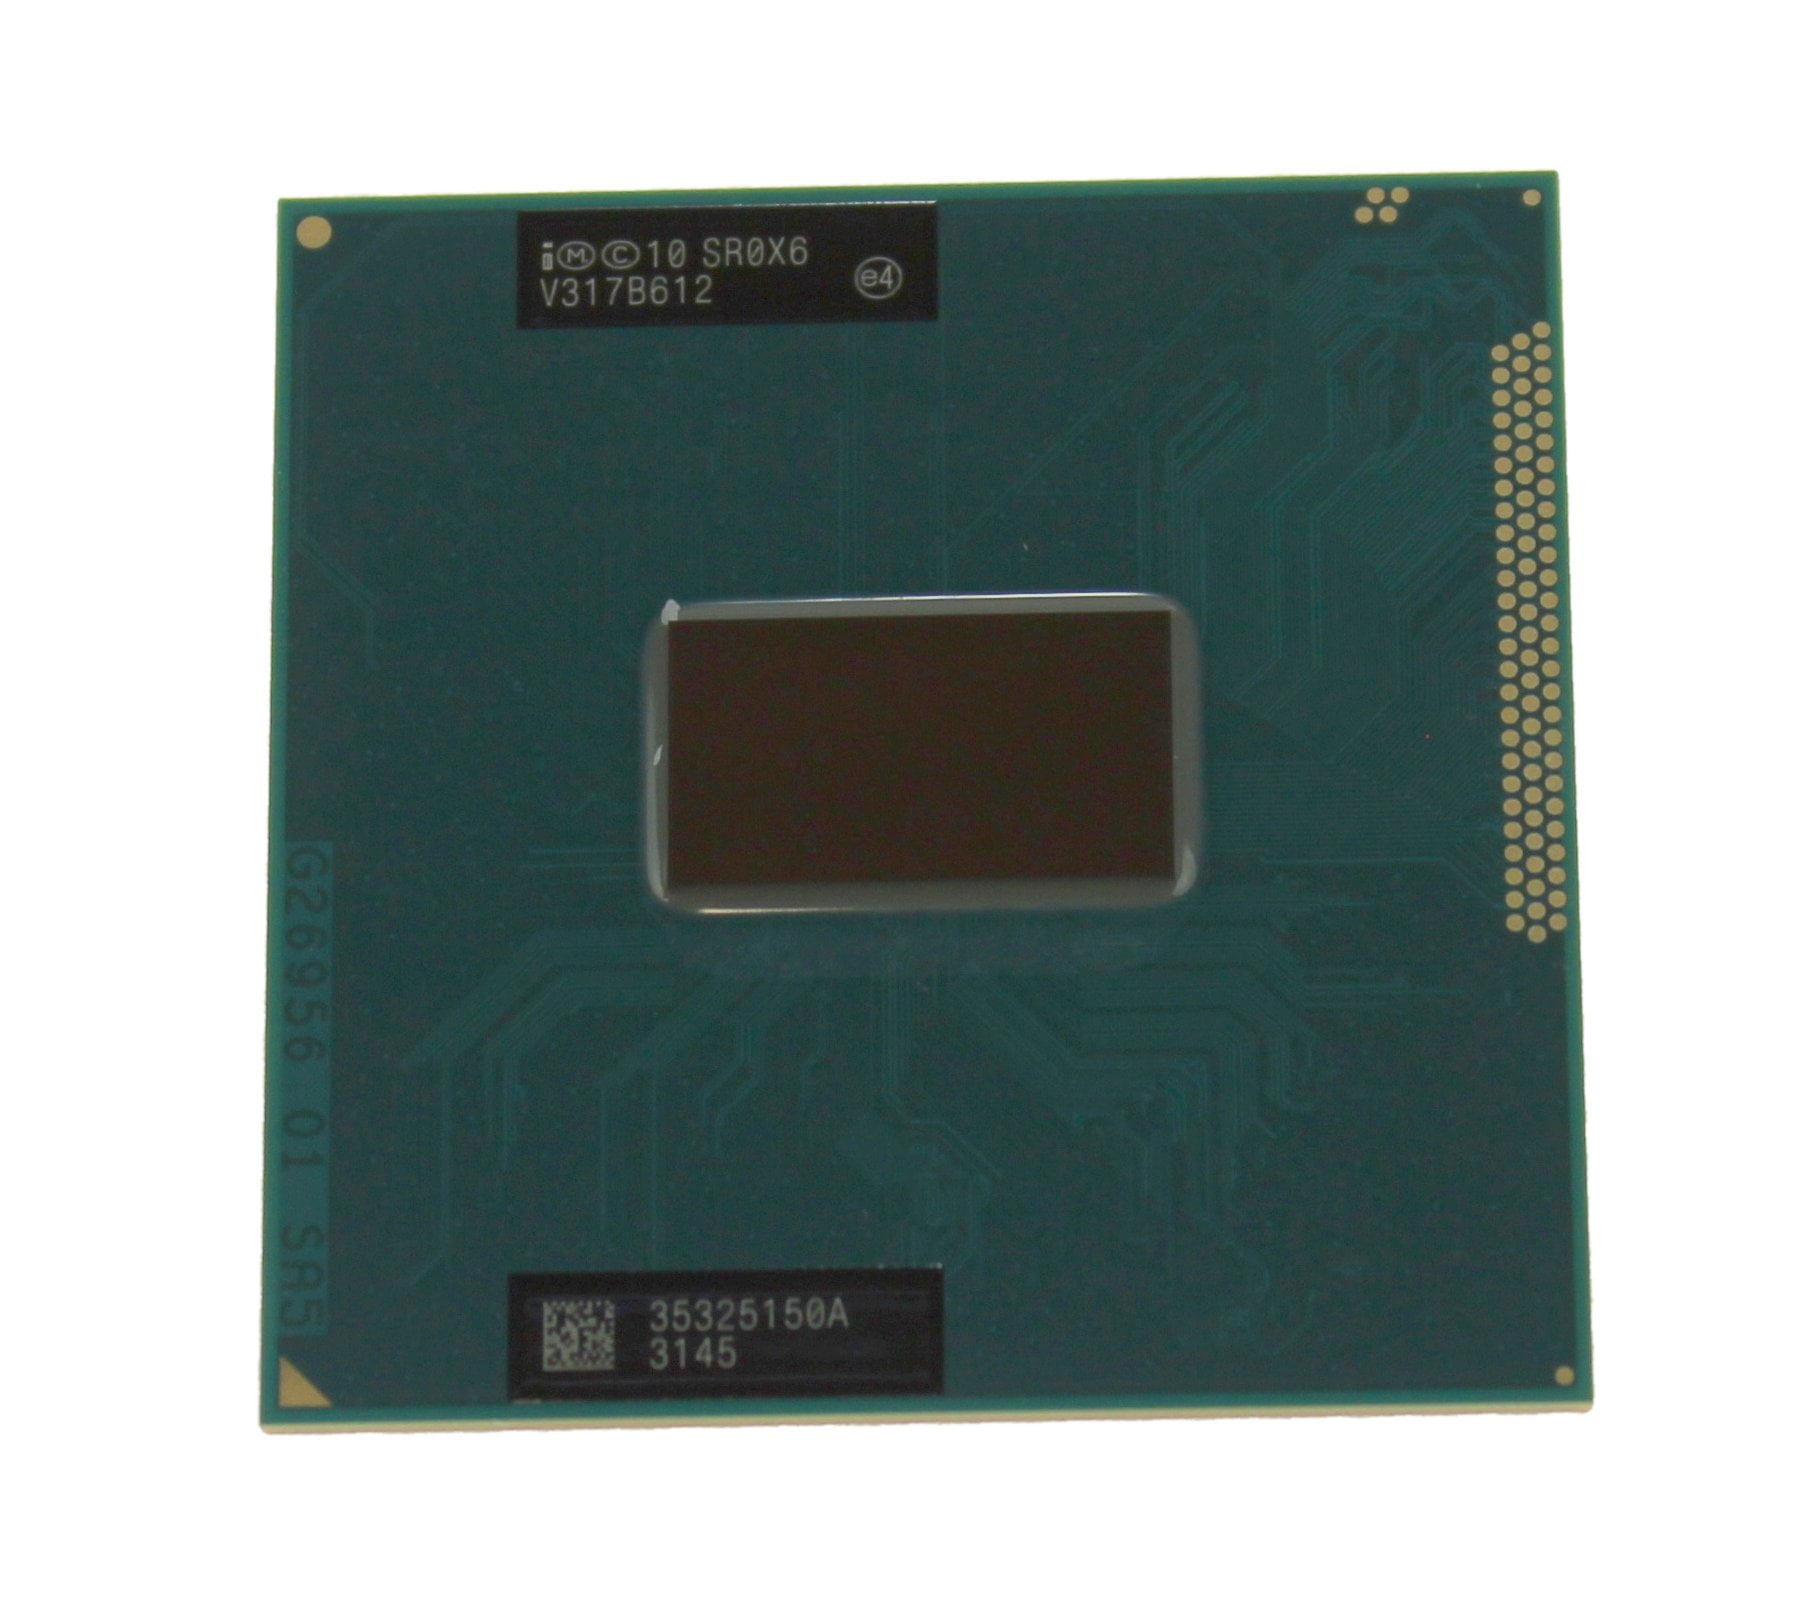 intel 2 Cores i7-3540M SR0X6 Socket G2 PGA988B Mobile CPU Processor 3GHz 4MB